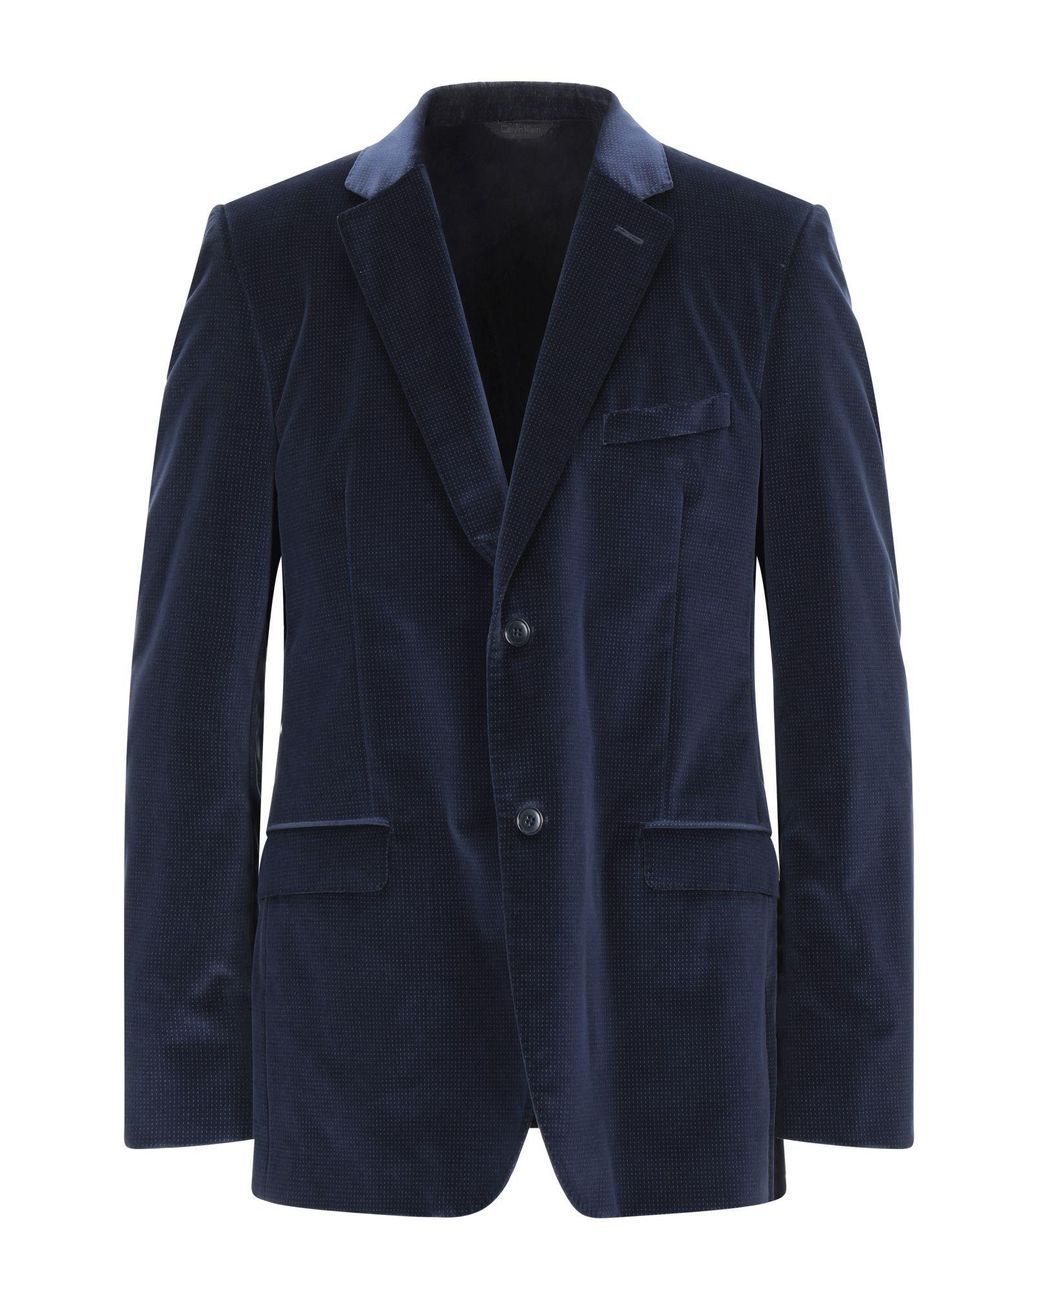 CALVIN KLEIN 205W39NYC Velvet Suit Jacket in Blue for Men - Lyst